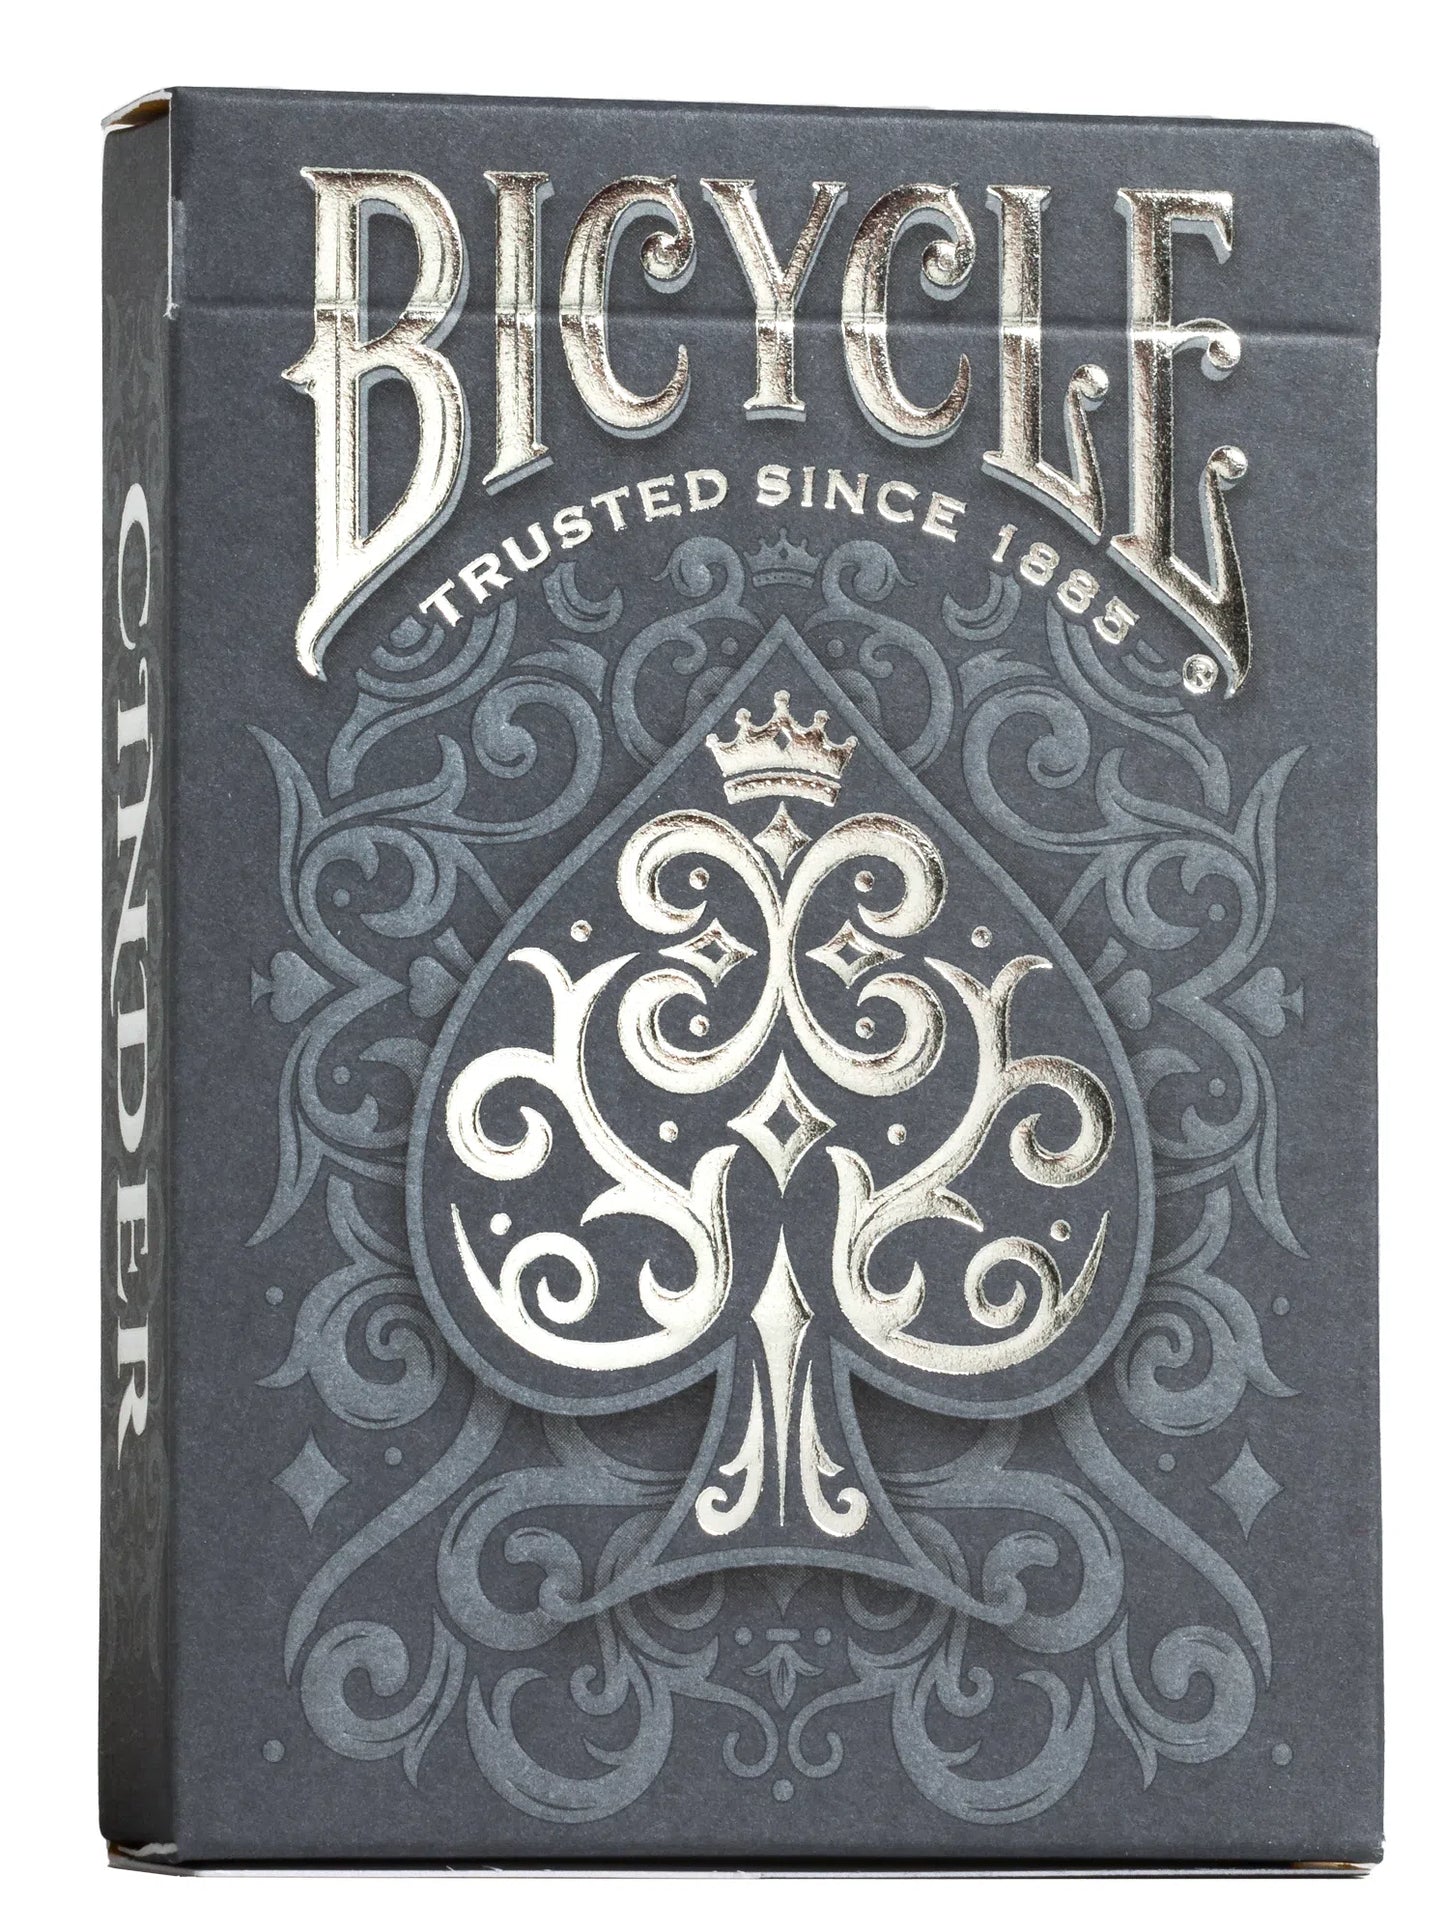 Cinder Bicycle Playing Cards